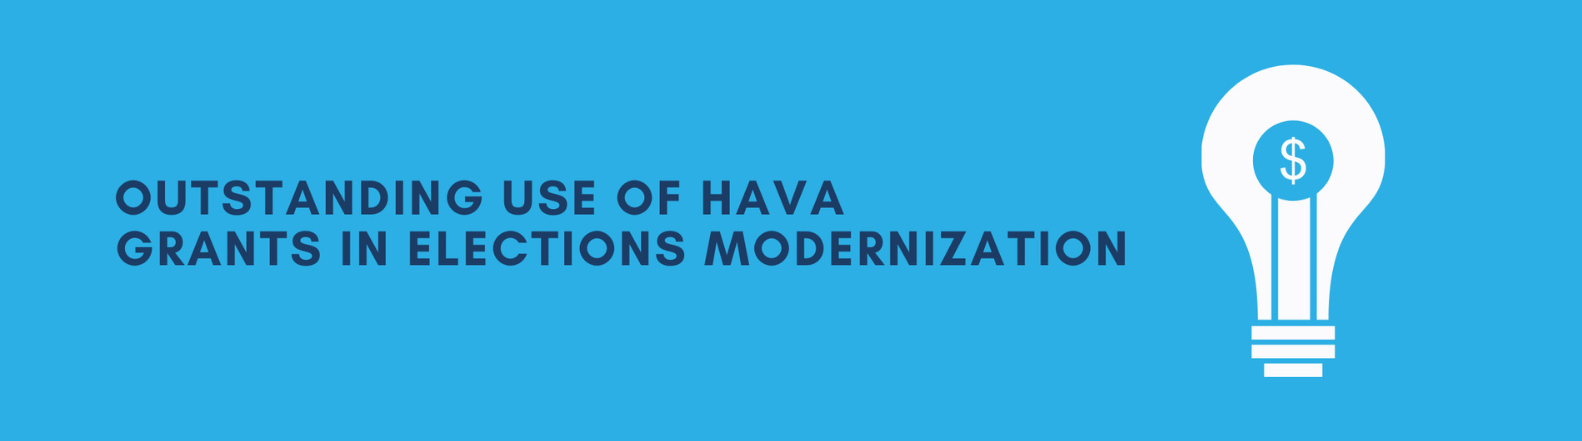 "Outstanding Use of HAVA Grants in Election Modernization"